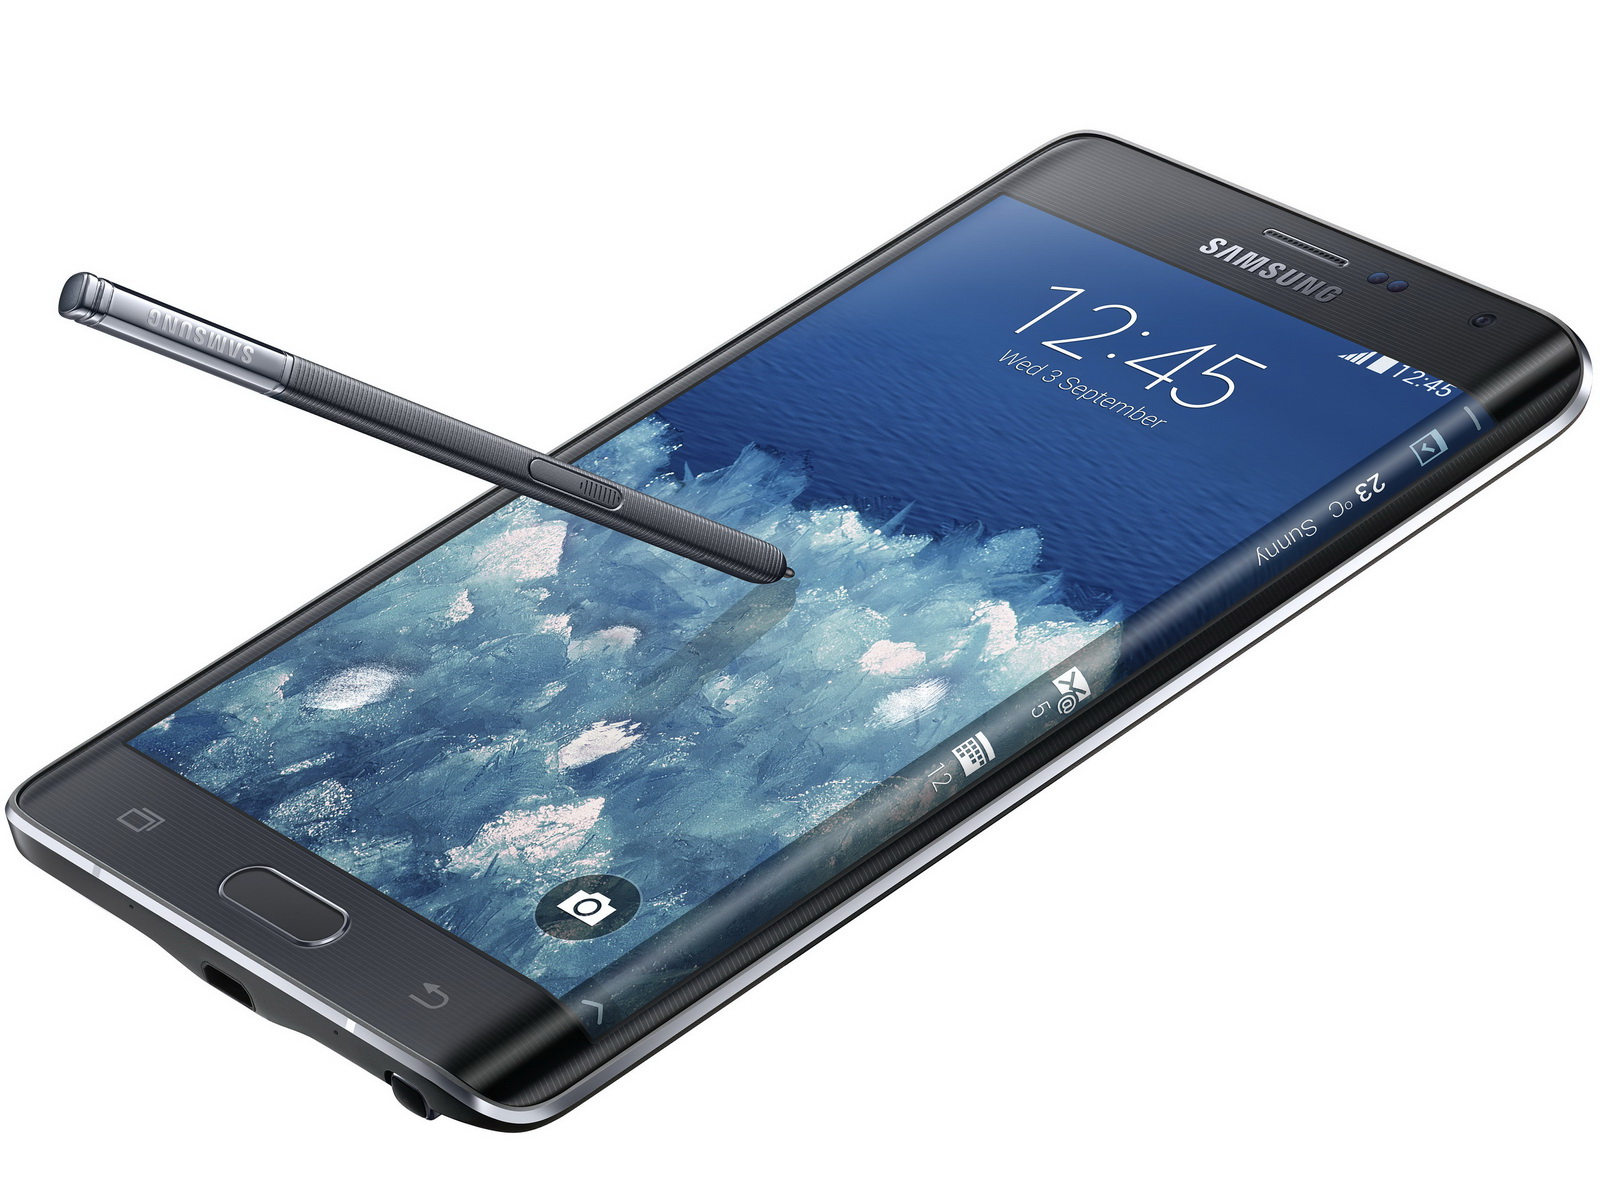 Análisis completo del Smartphone Samsung Galaxy S5 - Notebookcheck.org ...